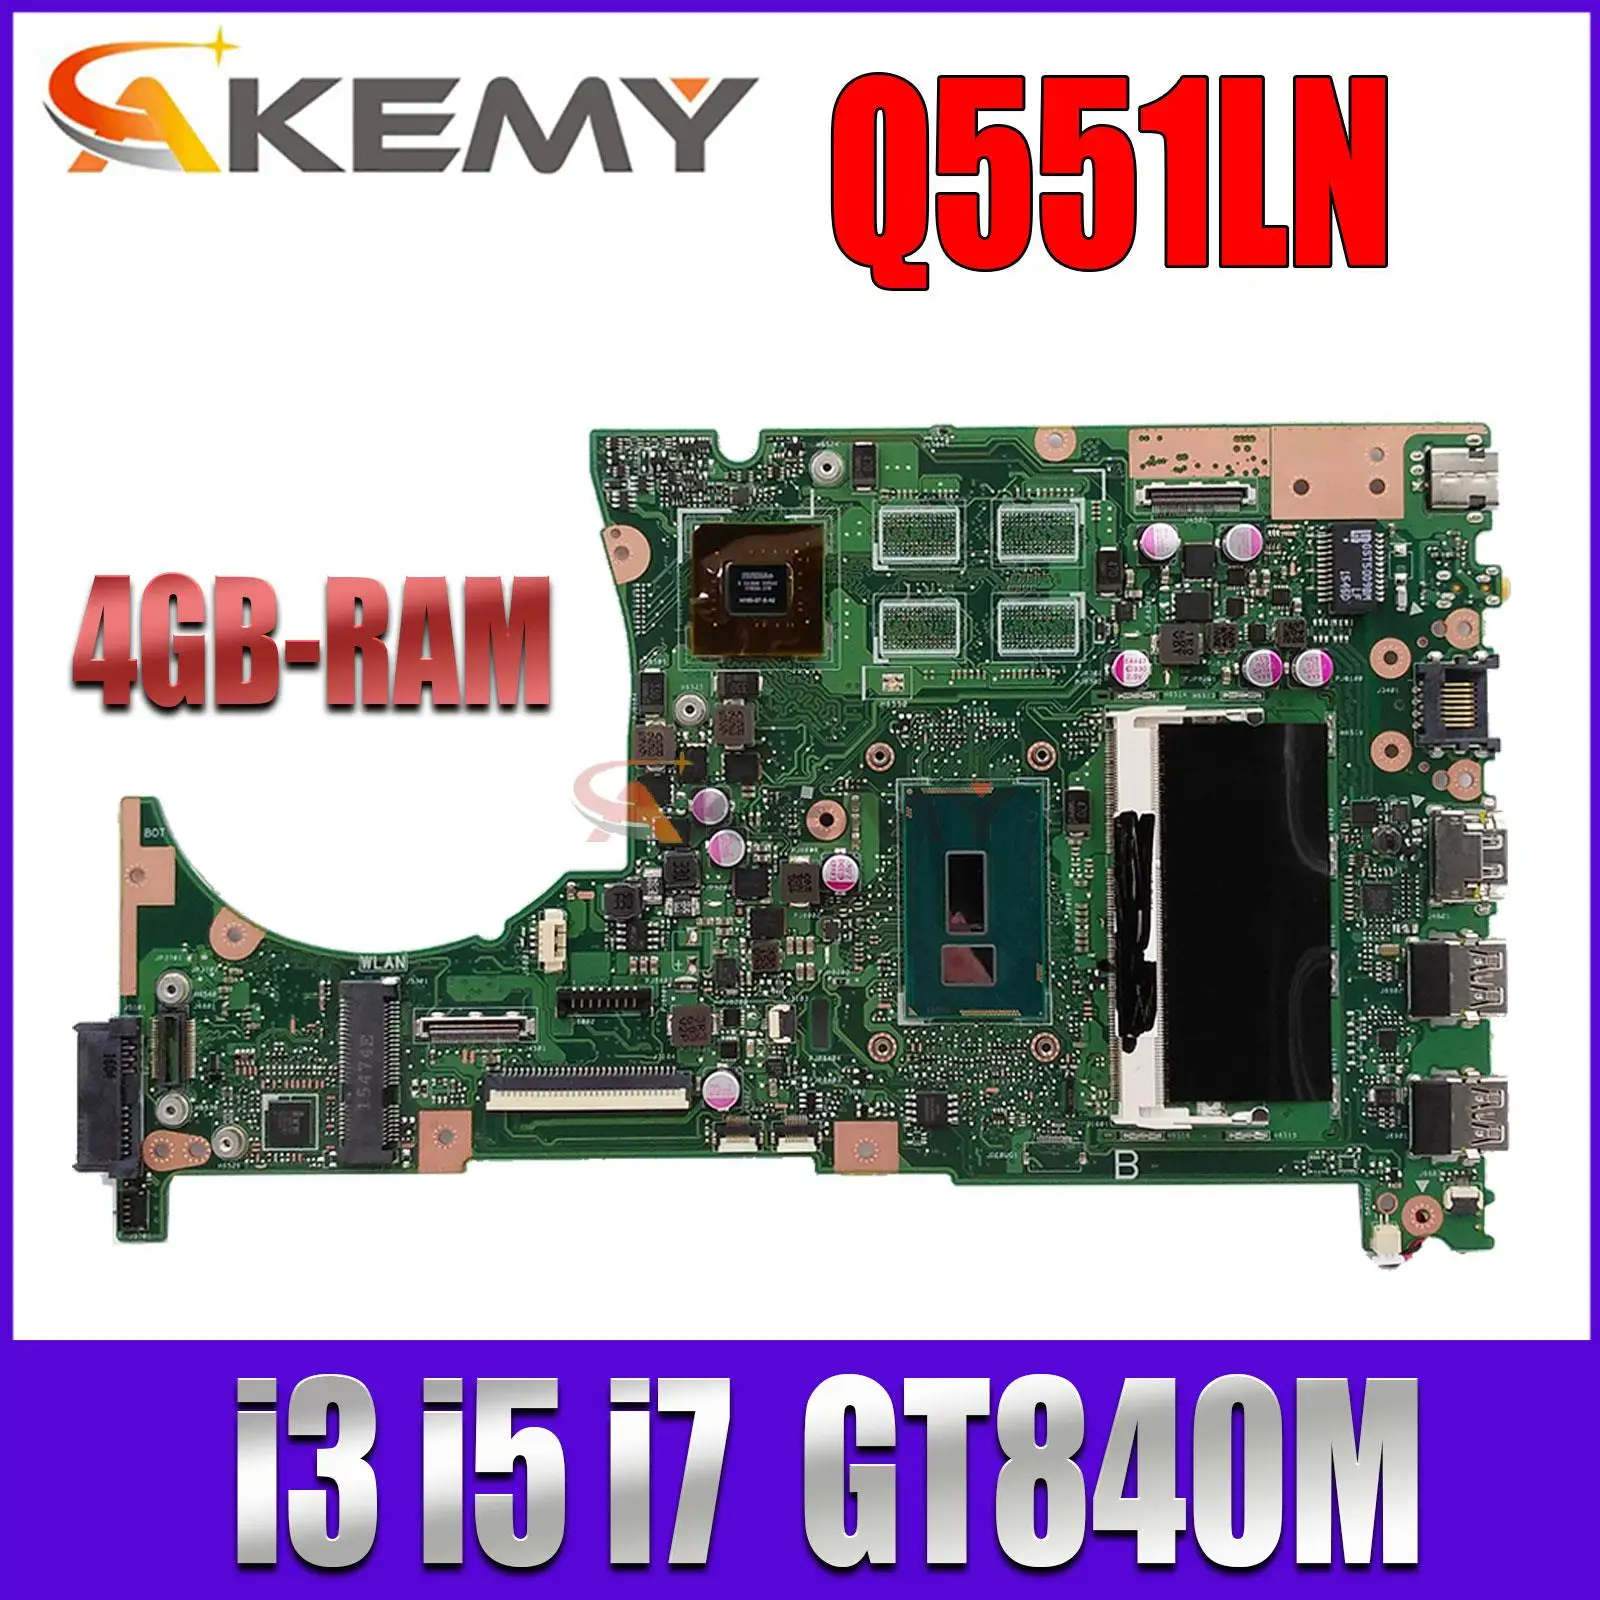 

Q551LN Notebook Mainboard For ASUS Q551LB Q551L Q551 Laptop Motherboard i3 i5 i7 4GB/RAM GT840M MAIN BOARD TEST OK